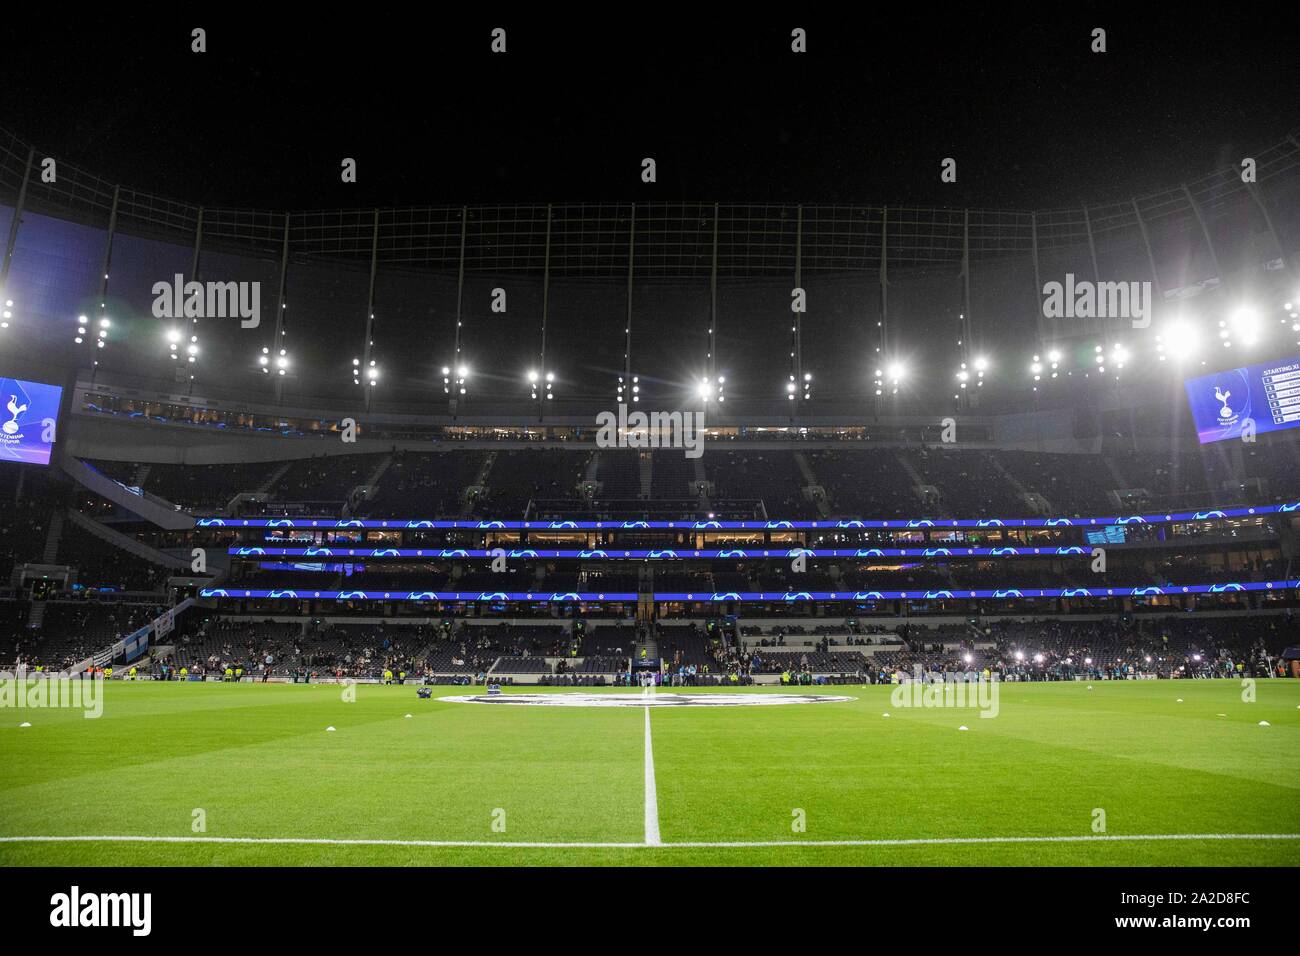 General View Inside The Tottenham Hotspur Stadium Ahead Of A Uefa Champions League Match Between Tottenham Hotspur And Bayern Munich Stock Photo Alamy